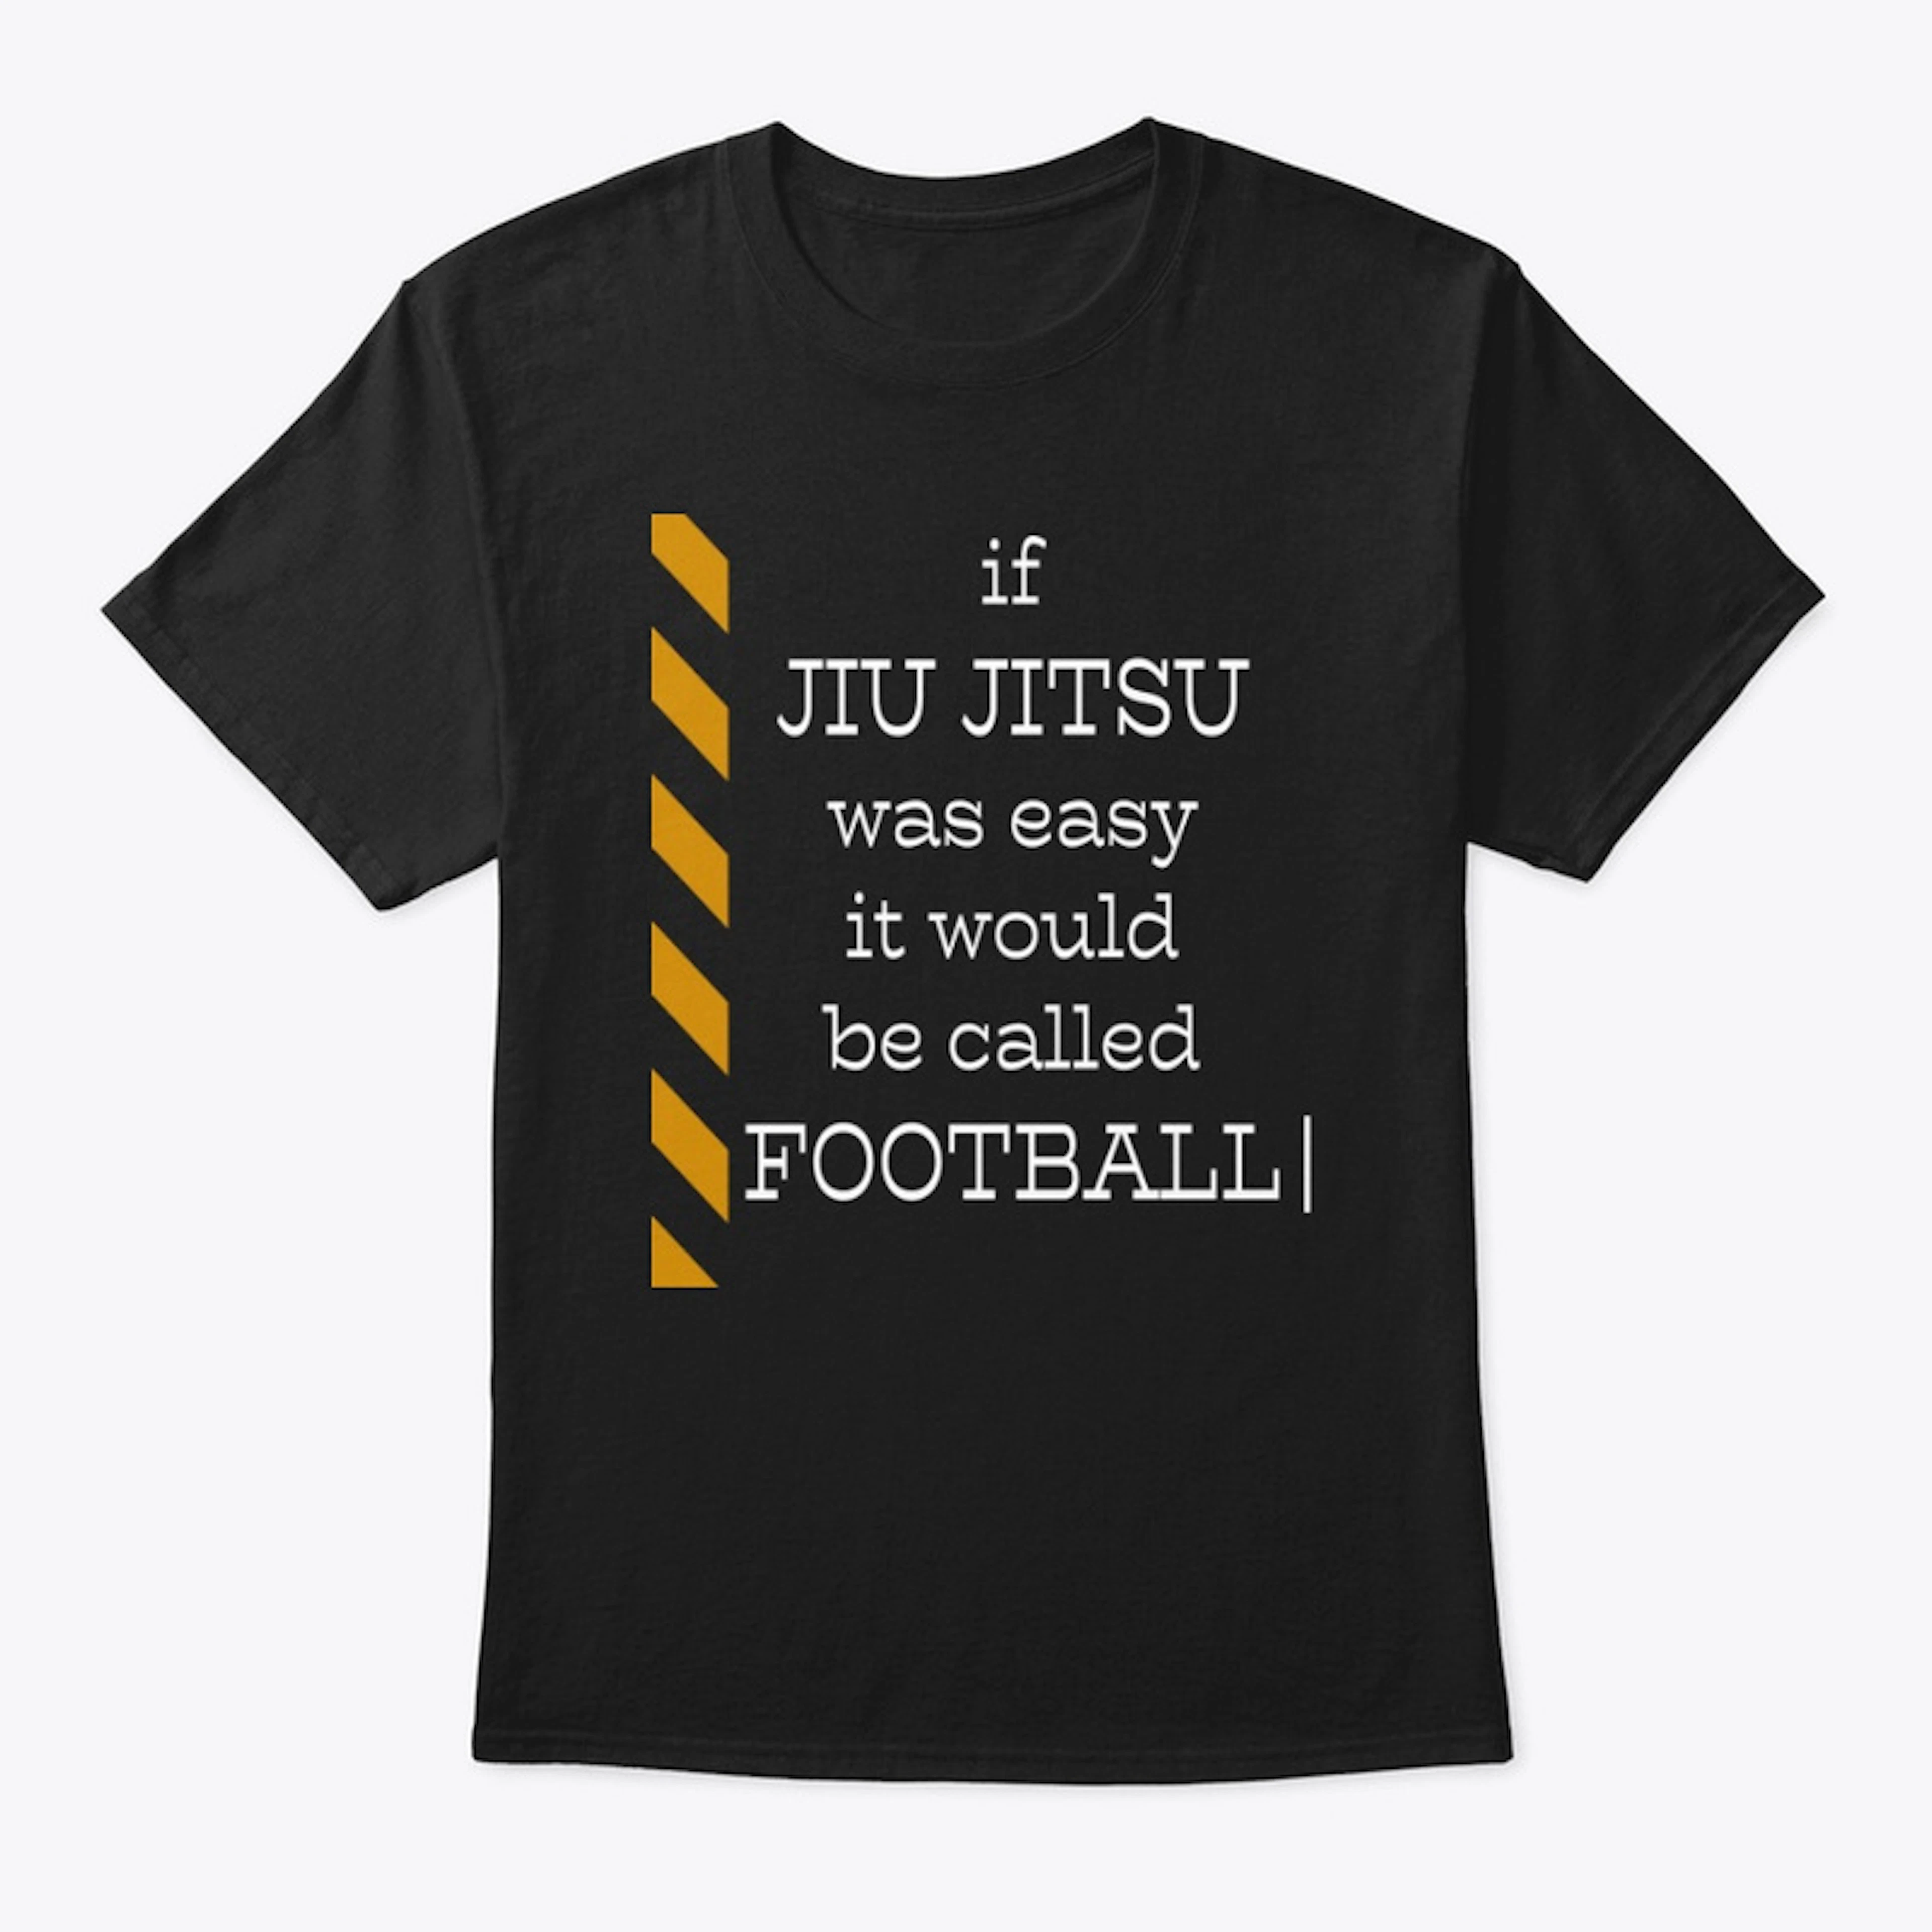 Jiu Jitsu vs. Football